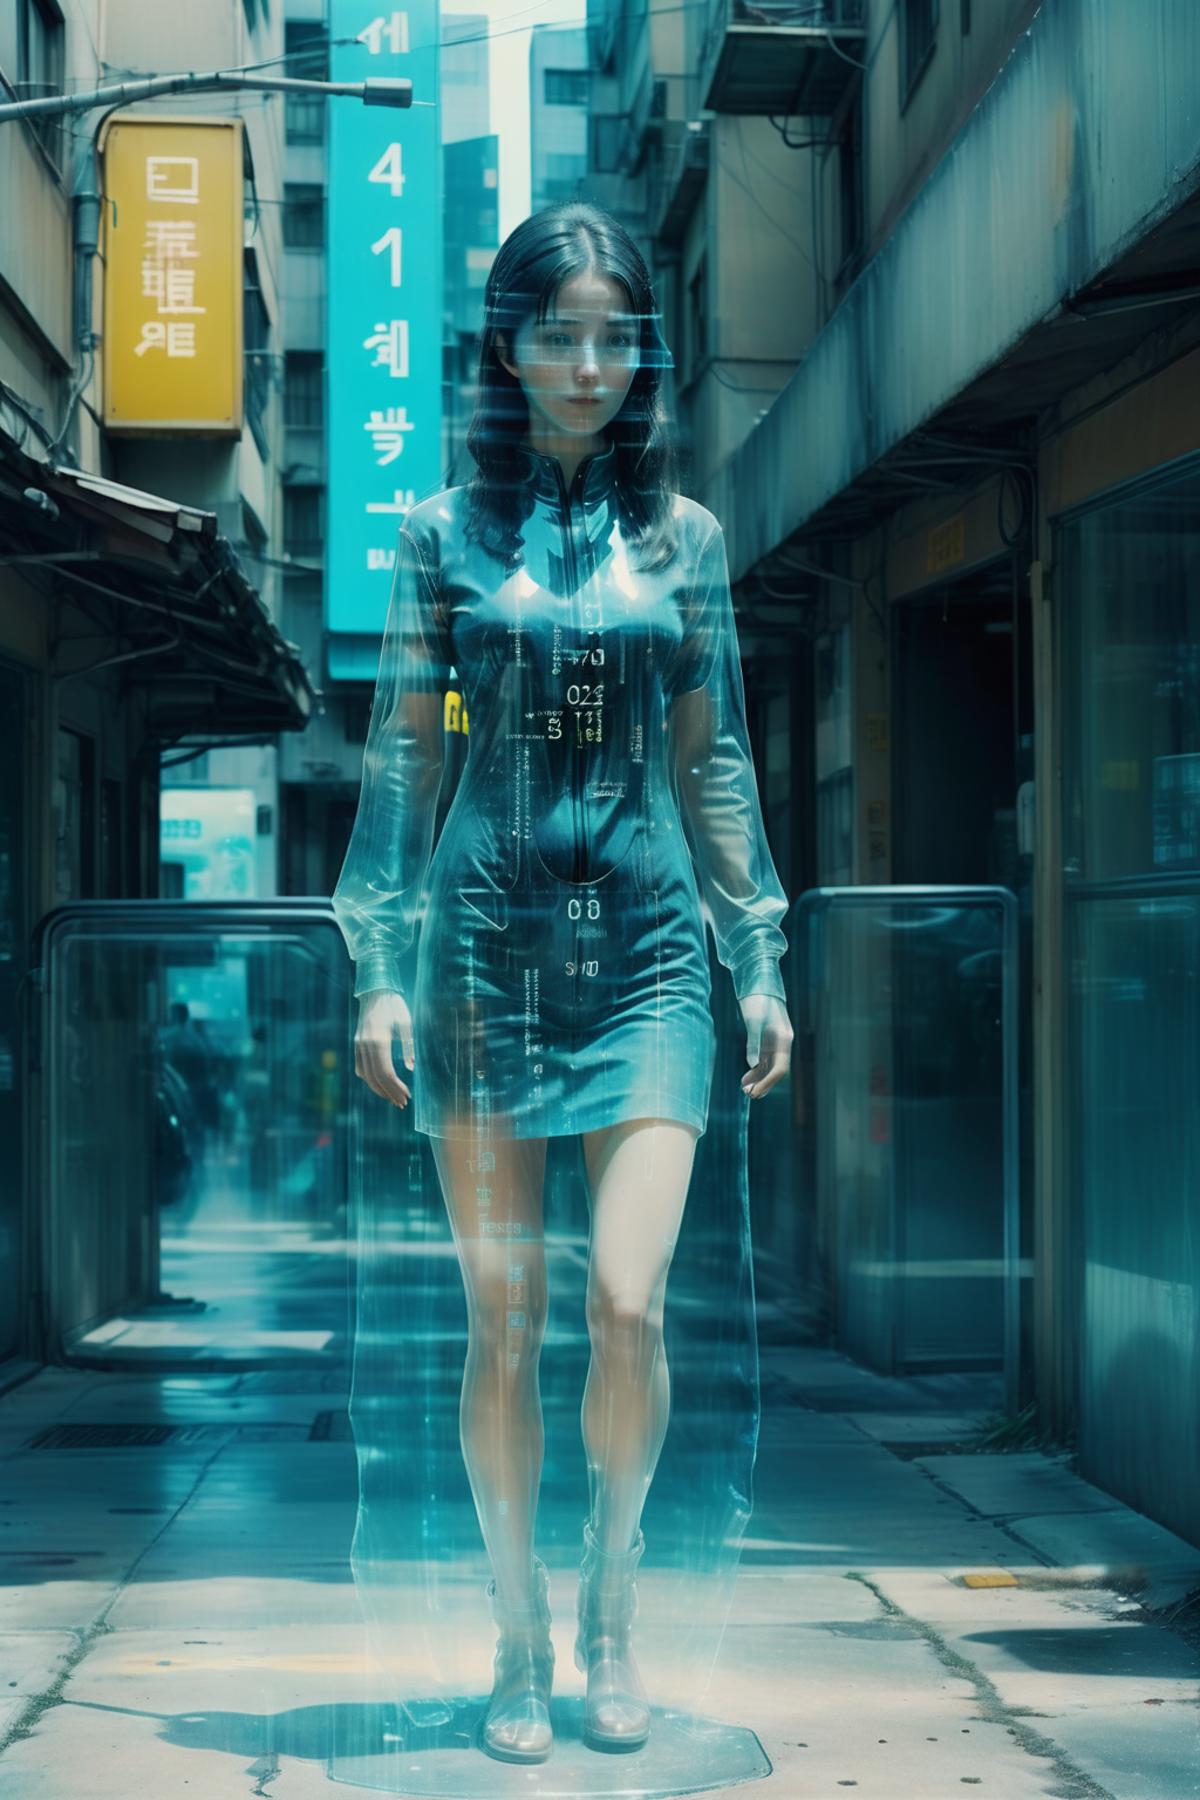 AI model image by hokono